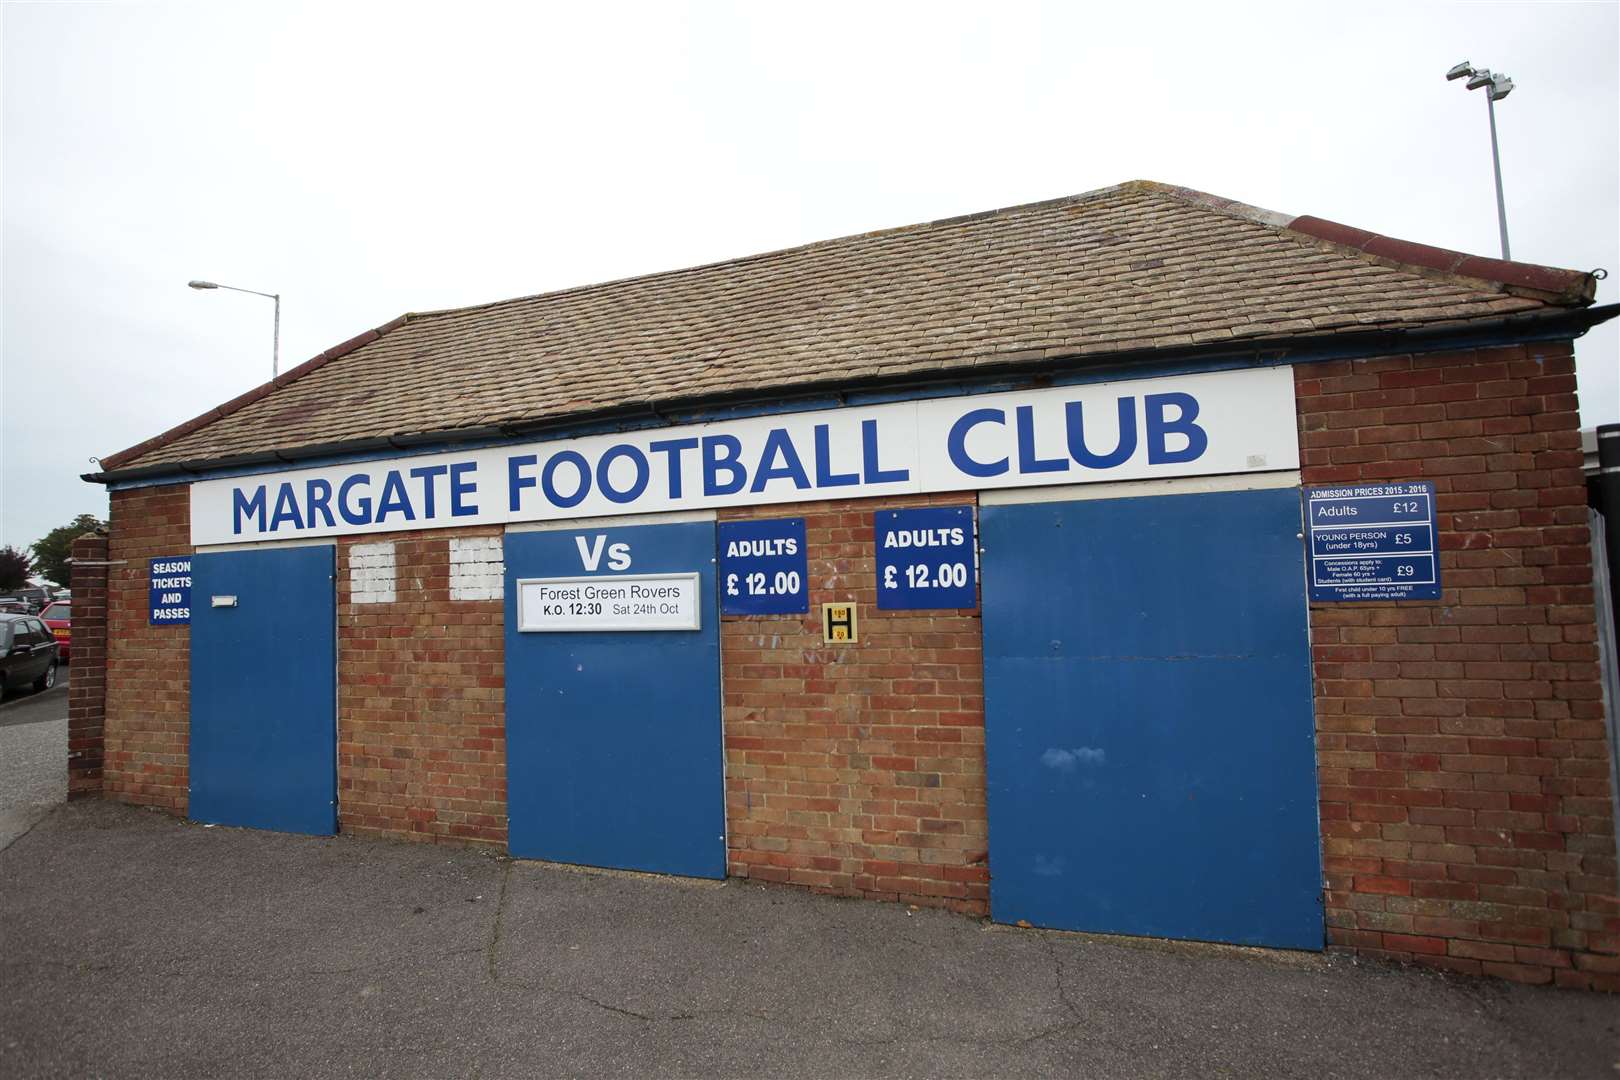 Margate's Hartsdown Park ground. Picture: Martin Apps